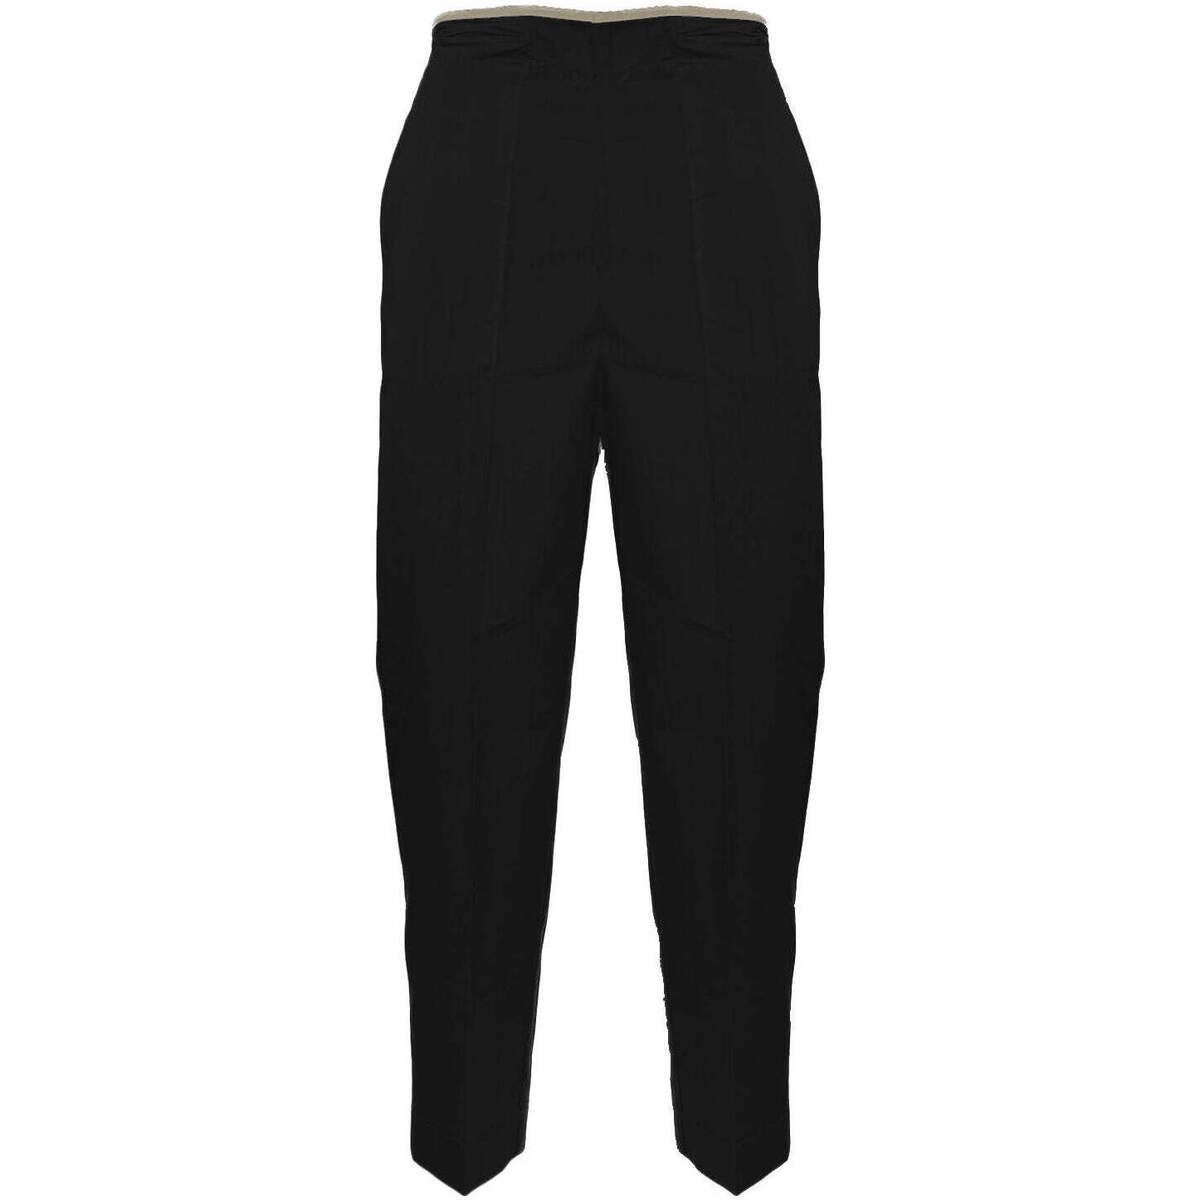 Textiel Dames Broeken / Pantalons Jucca  Zwart